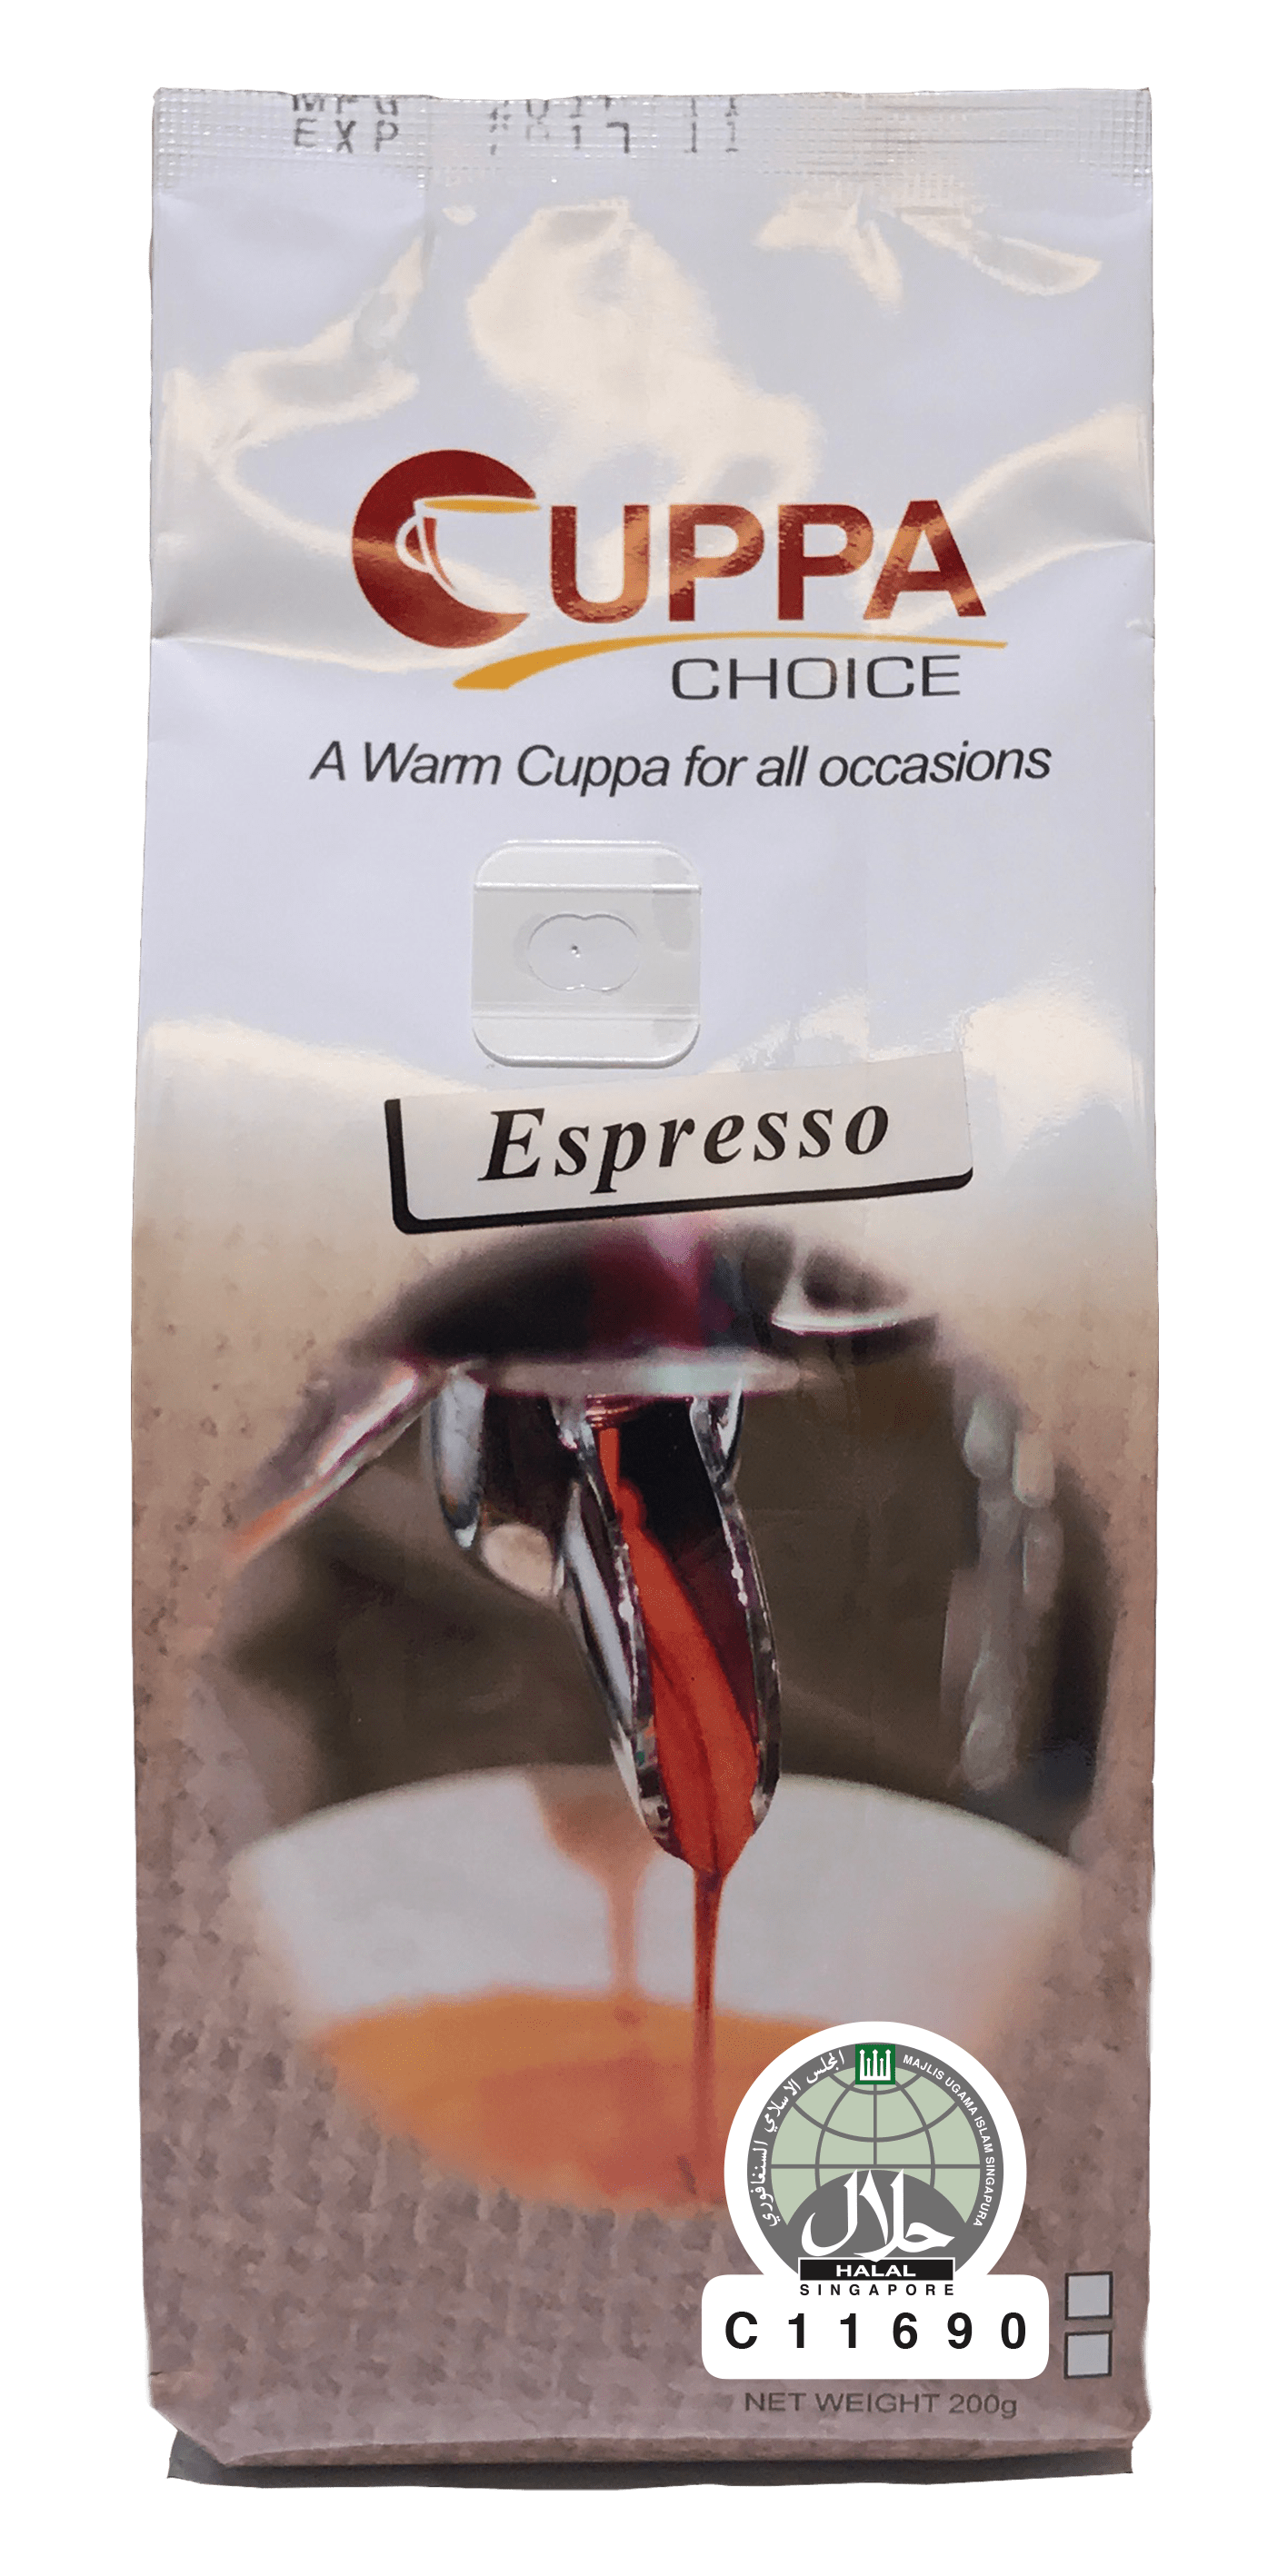 Cuppachoice Gourmet Coffee Beans Espresso Blend